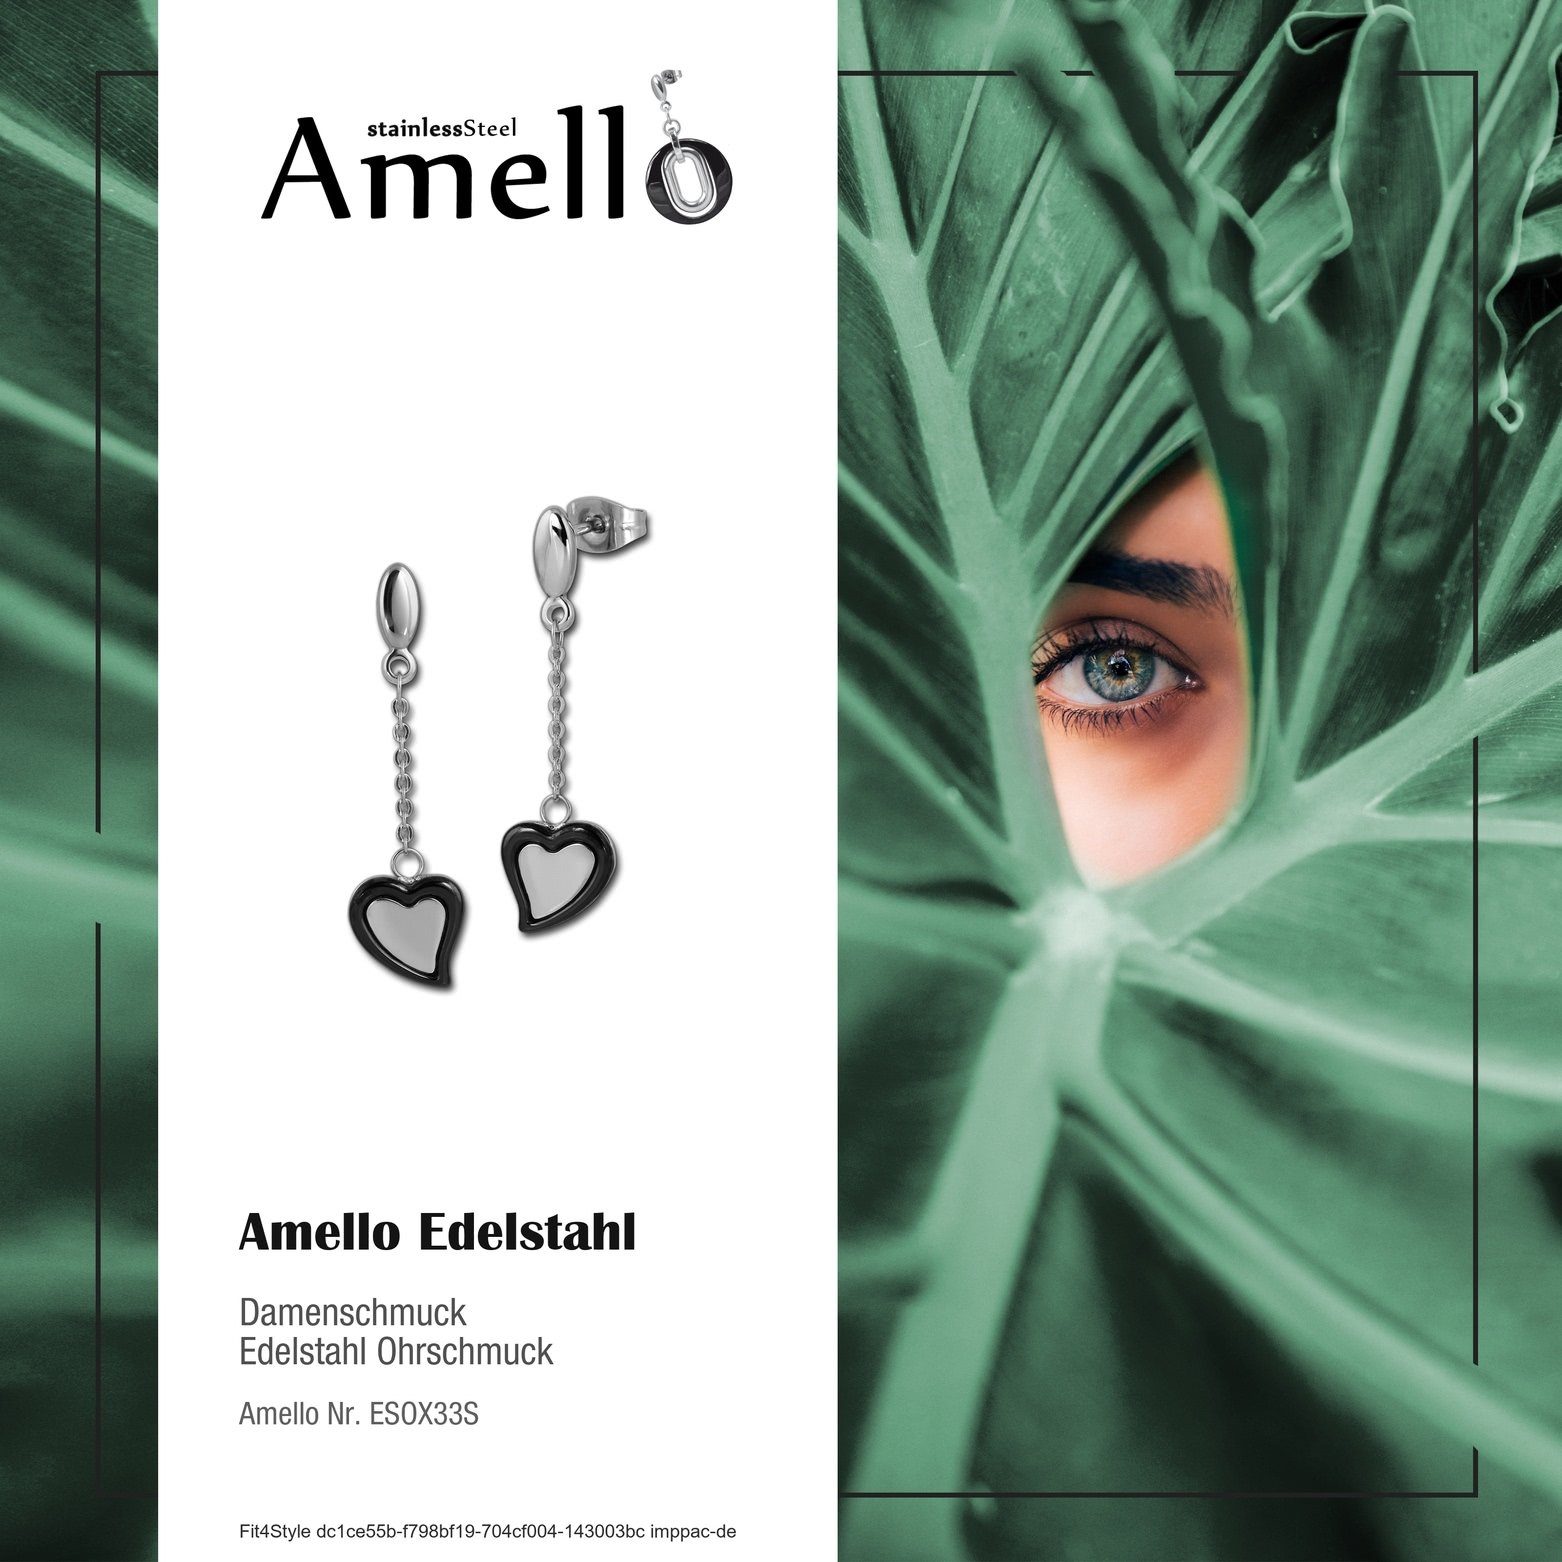 Amello Paar Ohrhänger Steel), Edelstahl Ohrringe silberfarben, Edelstahl in Ohrhänger Keramik (Stainless Herz Amello sch (Ohrhänger), Damen